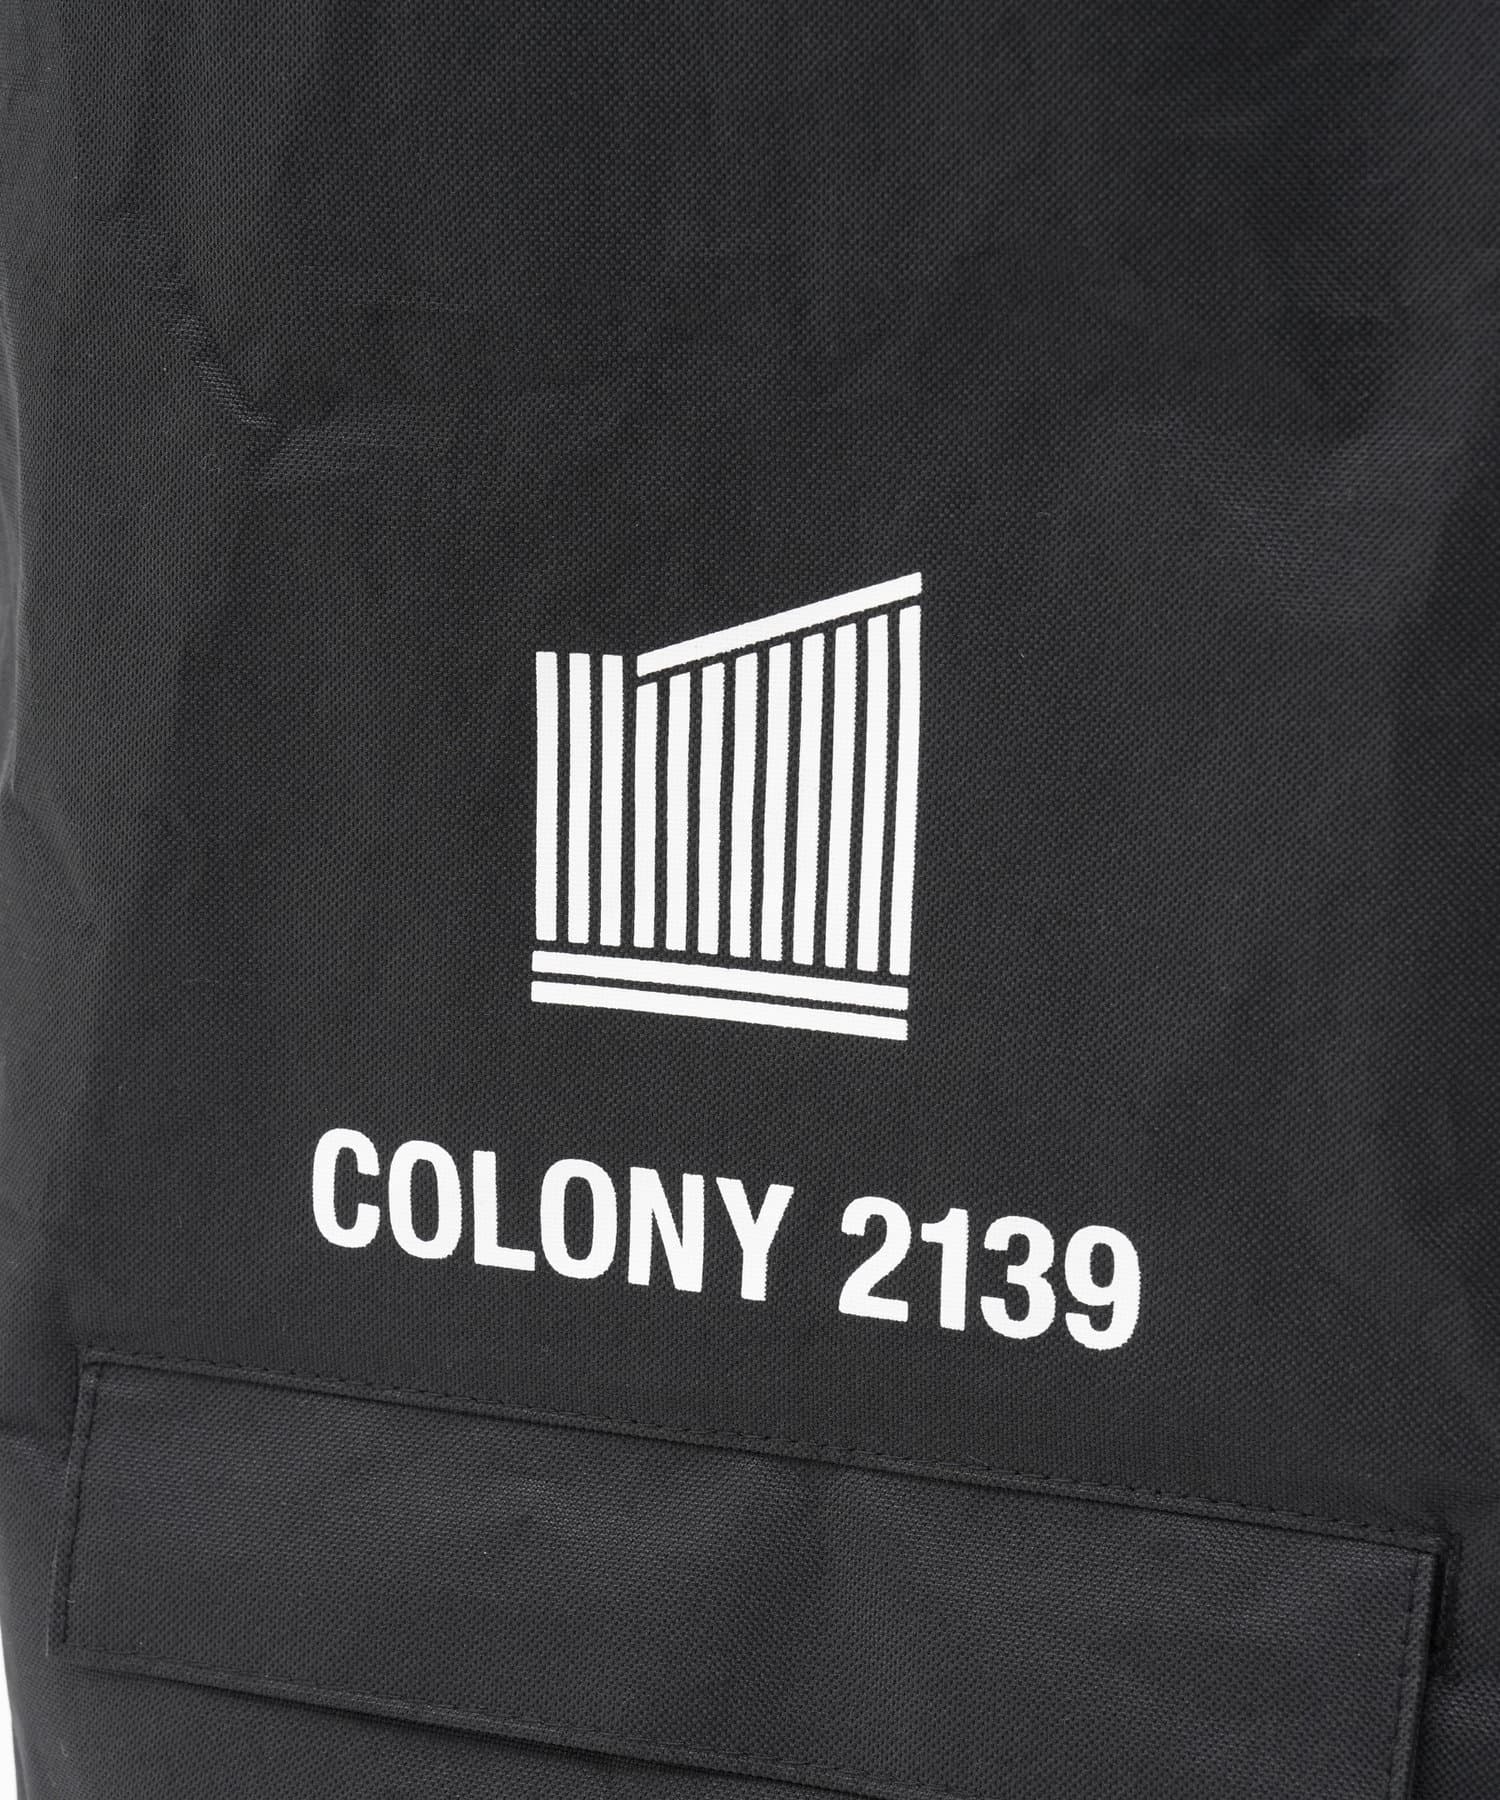 COLONY 2139(コロニー トゥーワンスリーナイン) ランドリーバスケット